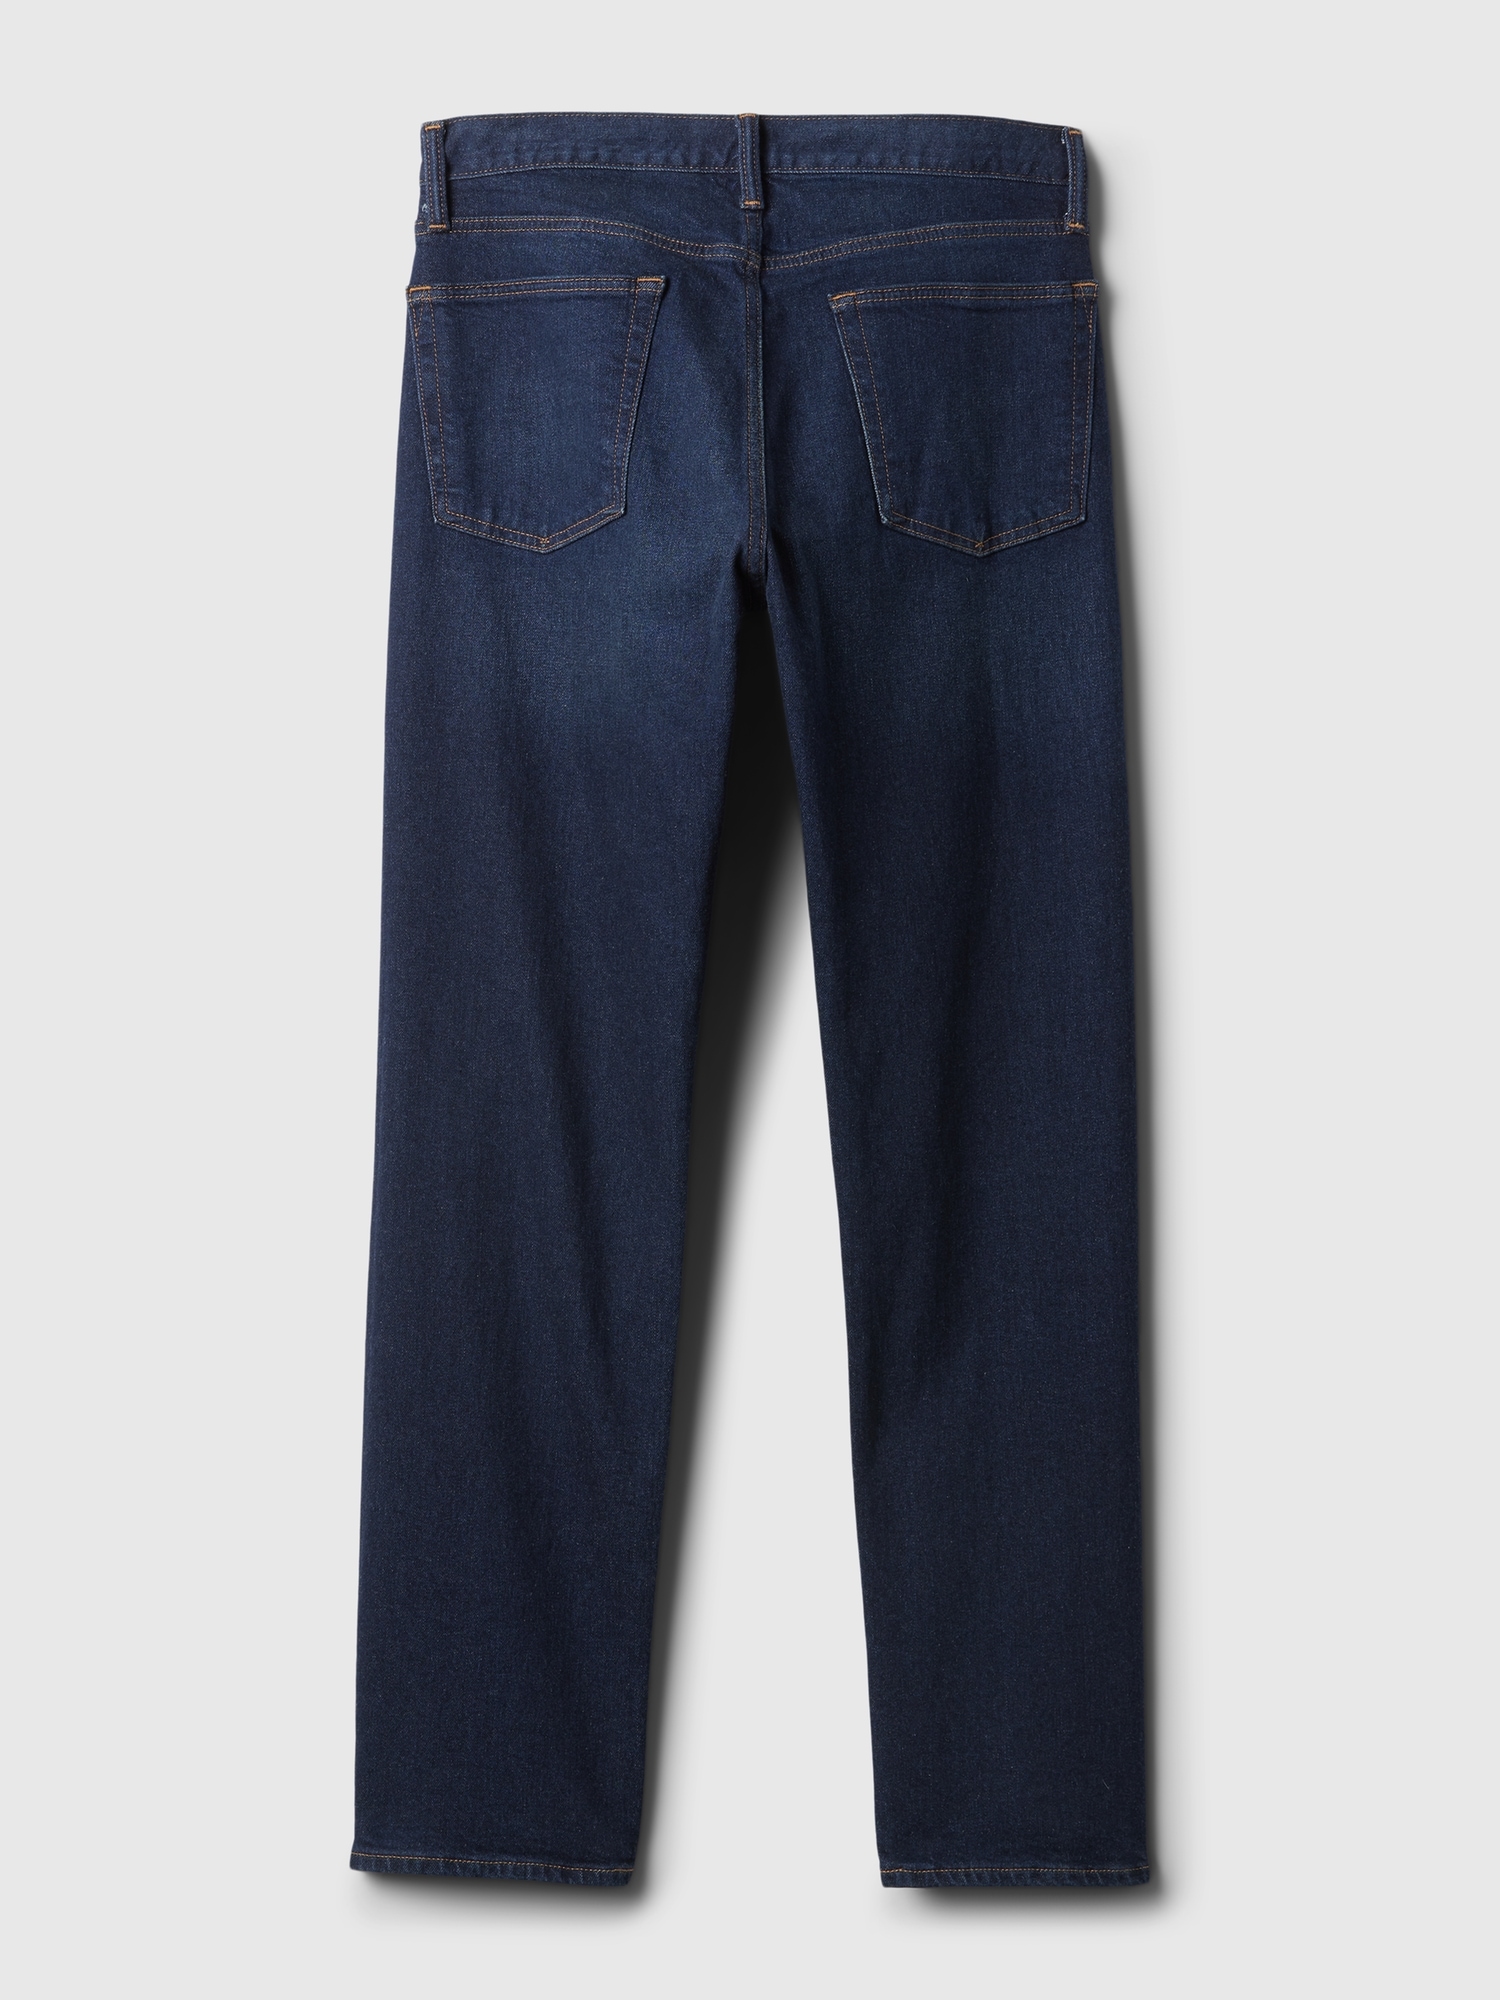 Buy Gap Dark Wash Blue Stretch Slim Fit Soft Wear Jeans from Next